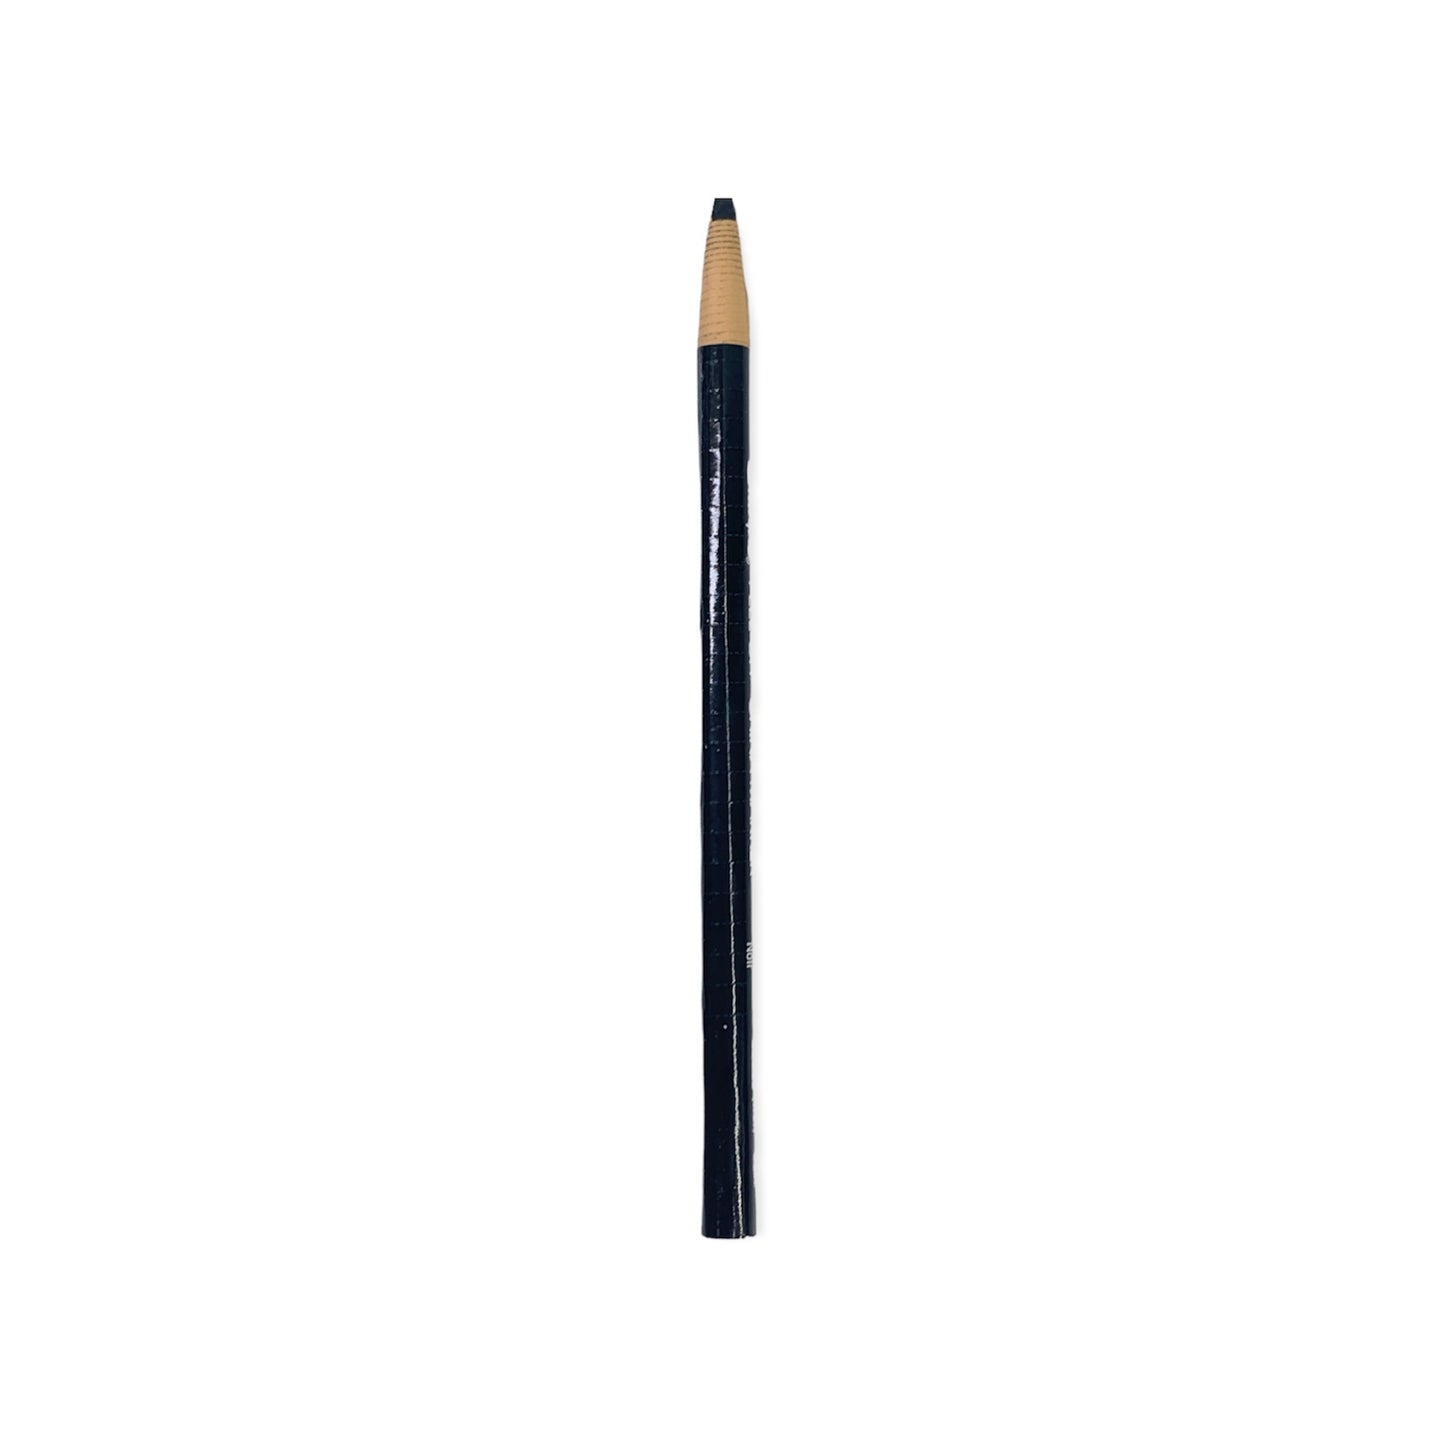 Black Wax Pencil